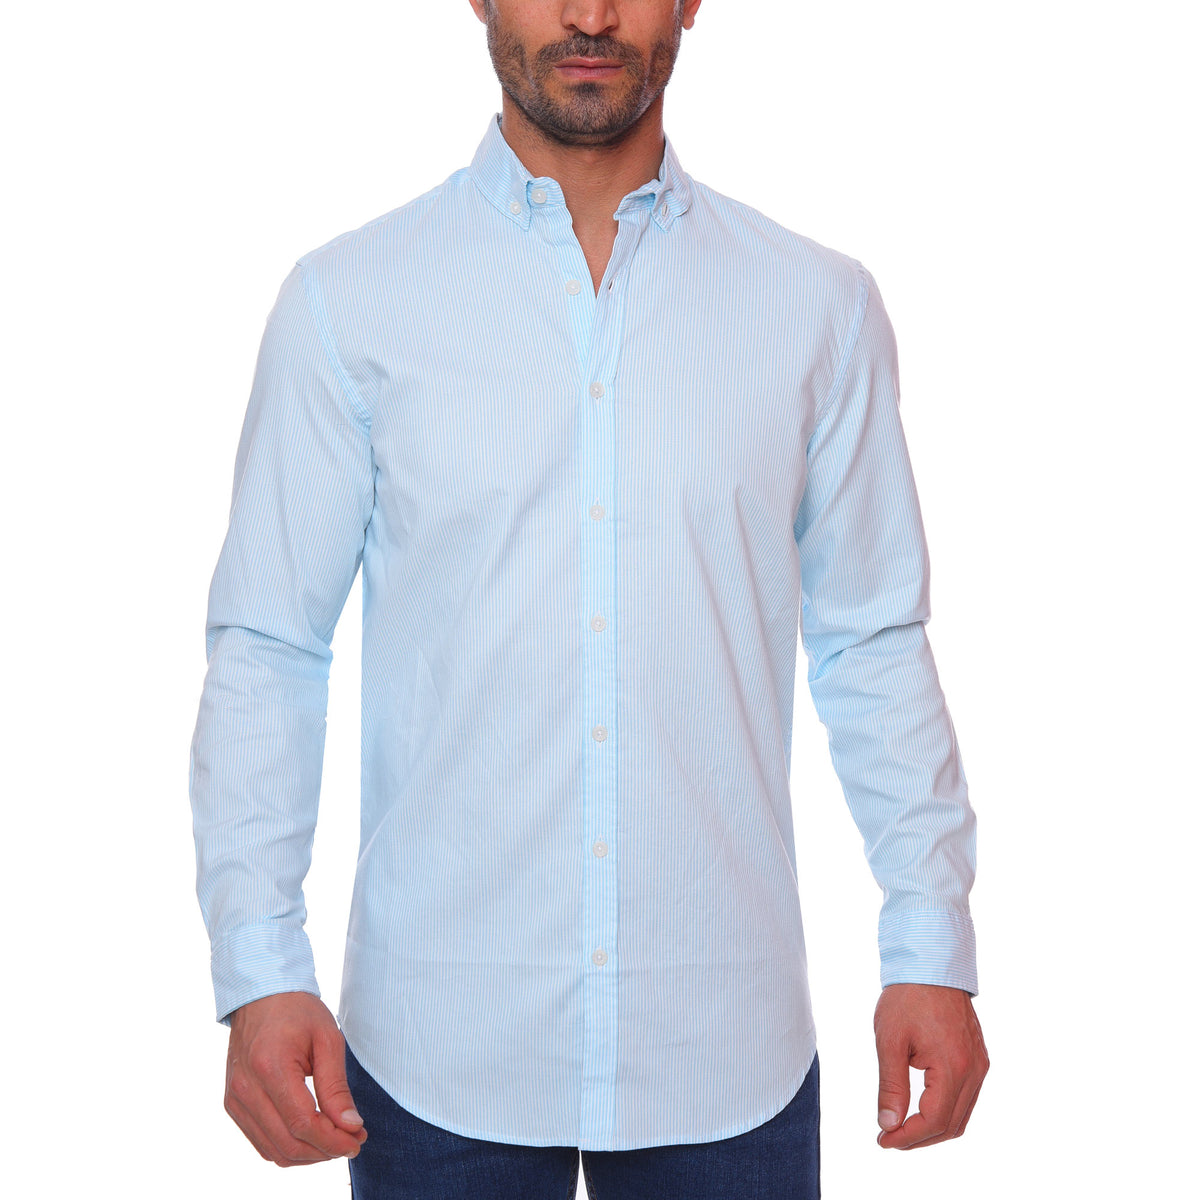 Turqoise Classic Cotton shirt(584)